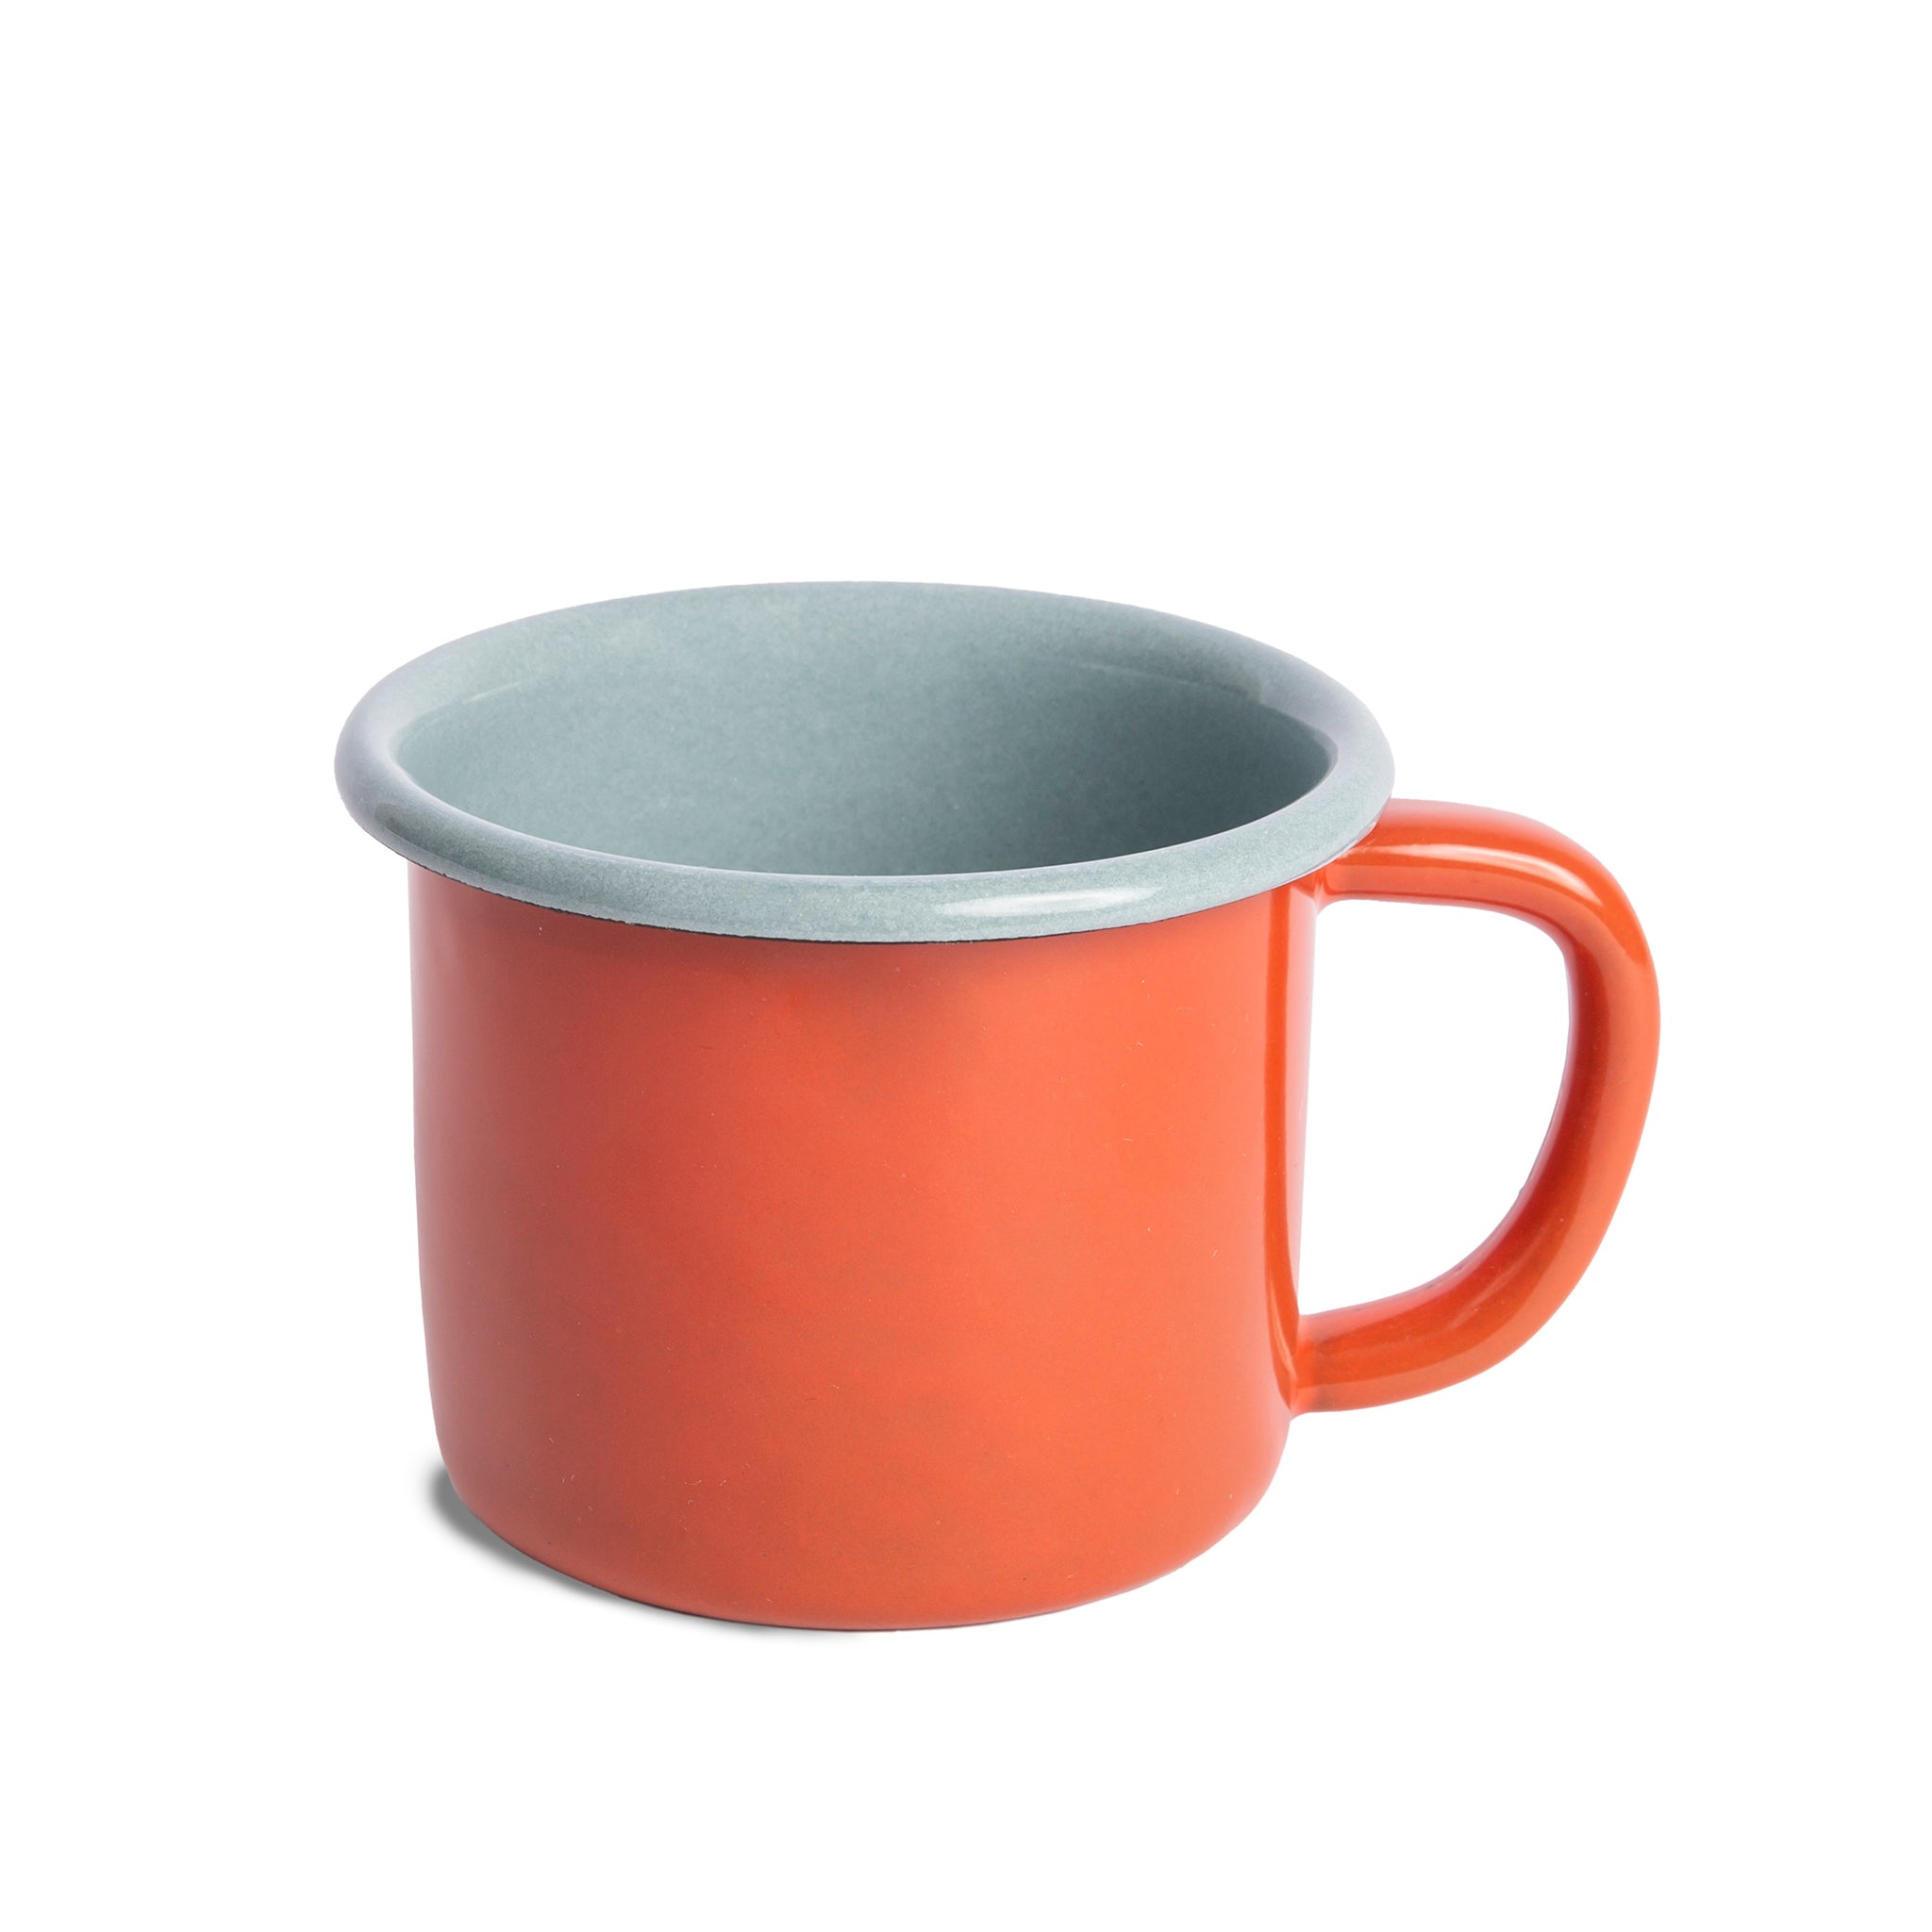 The Get Out Enamel mug